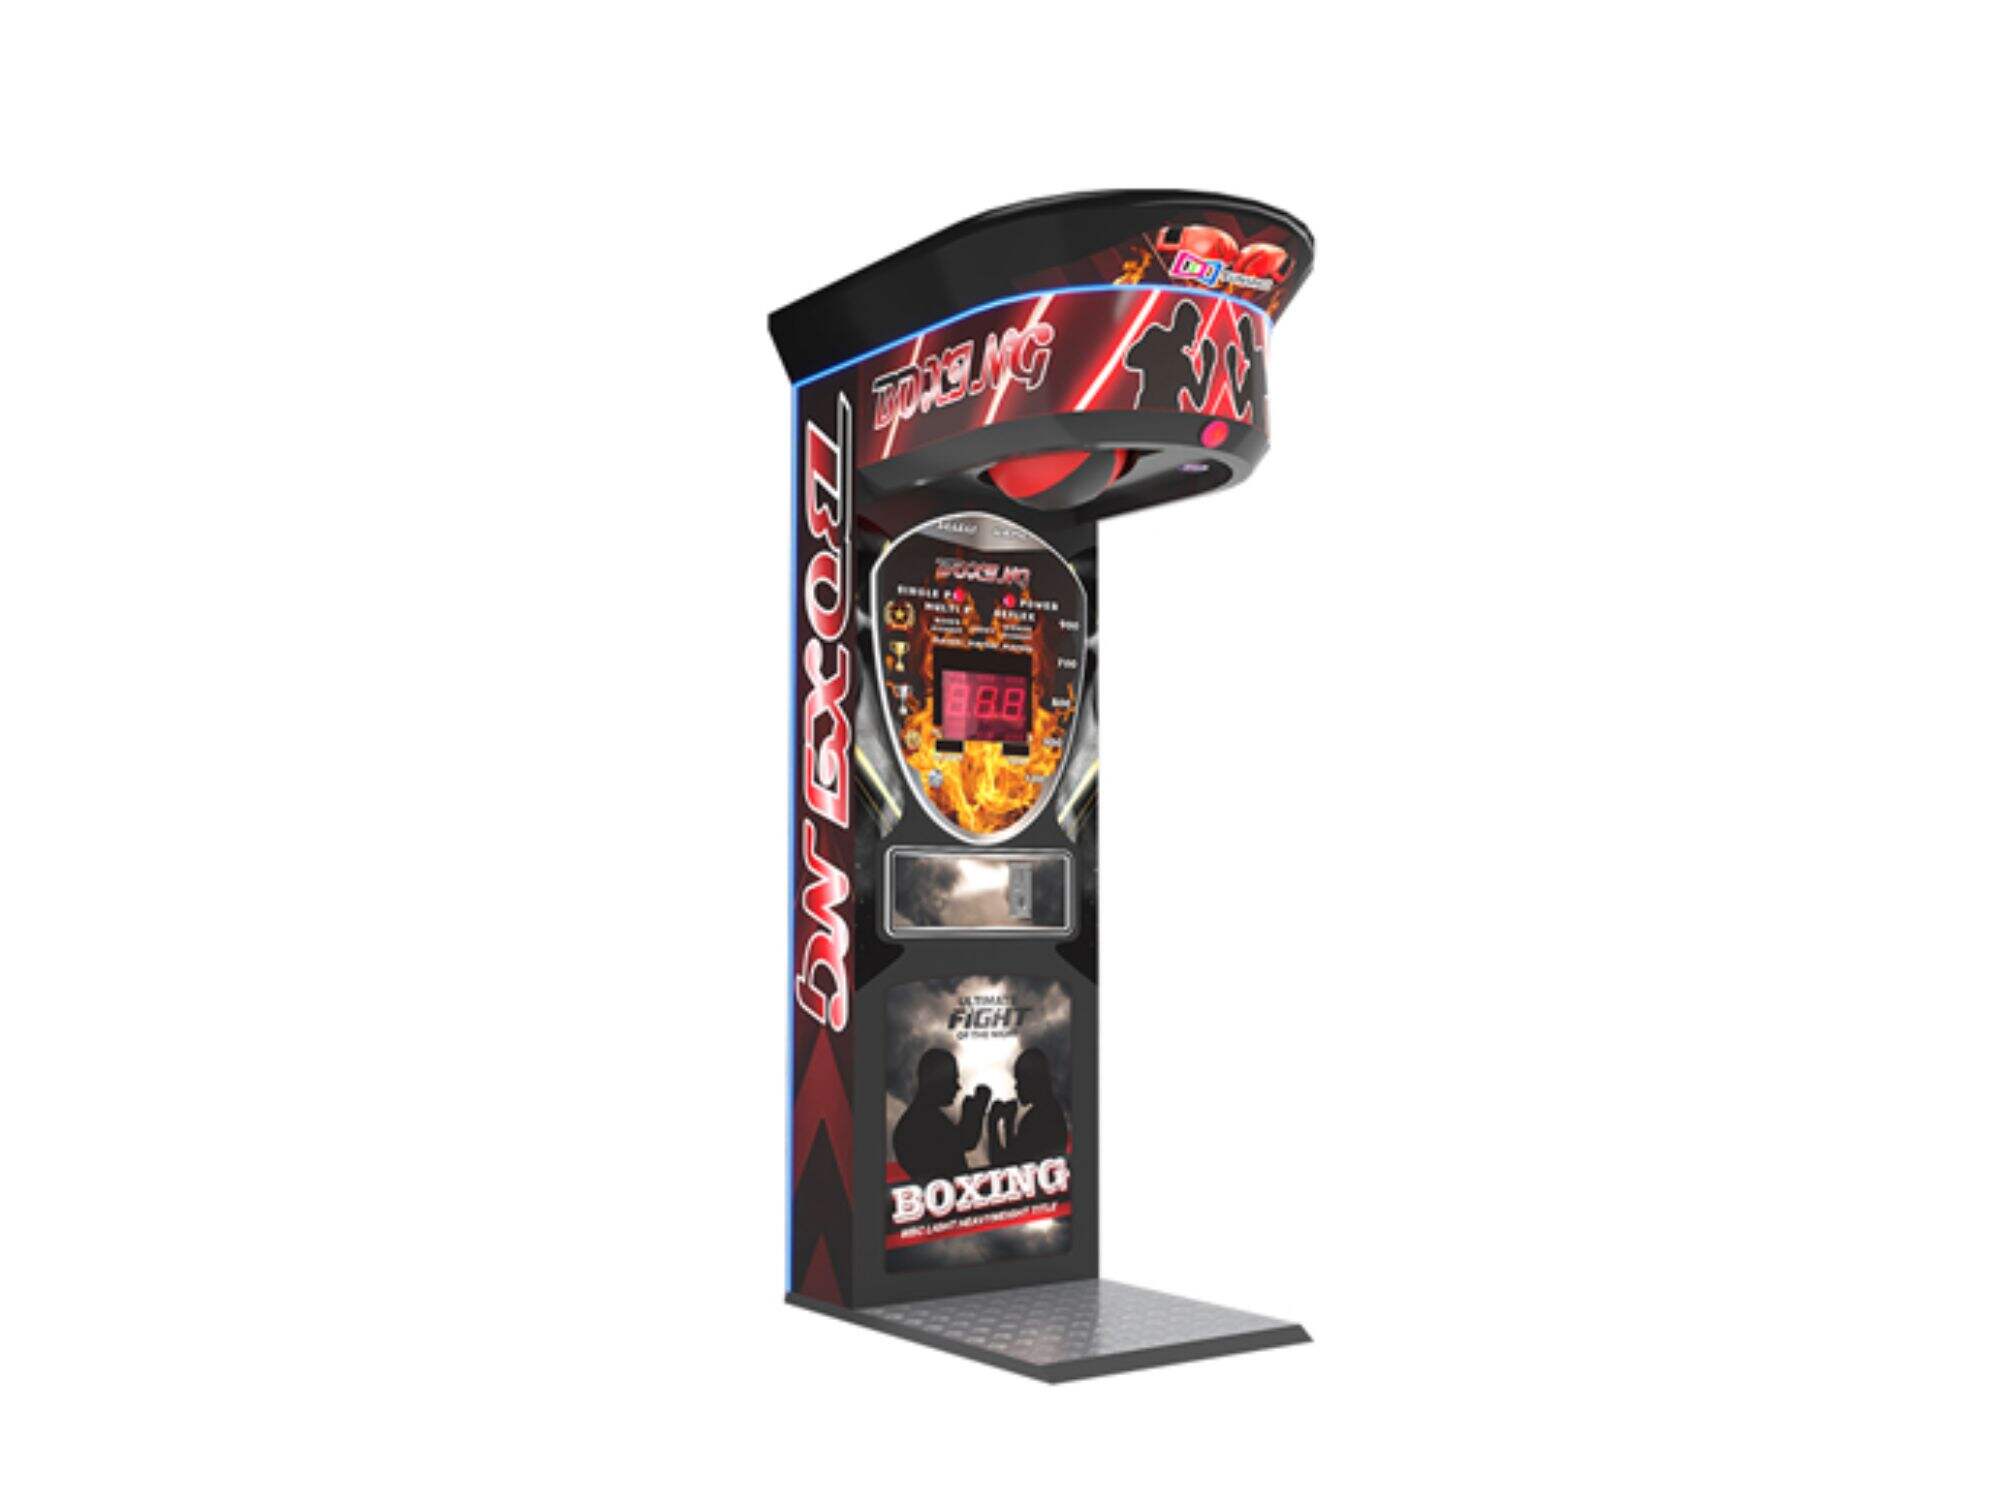 Black Red Boxing Machine Arcade Game